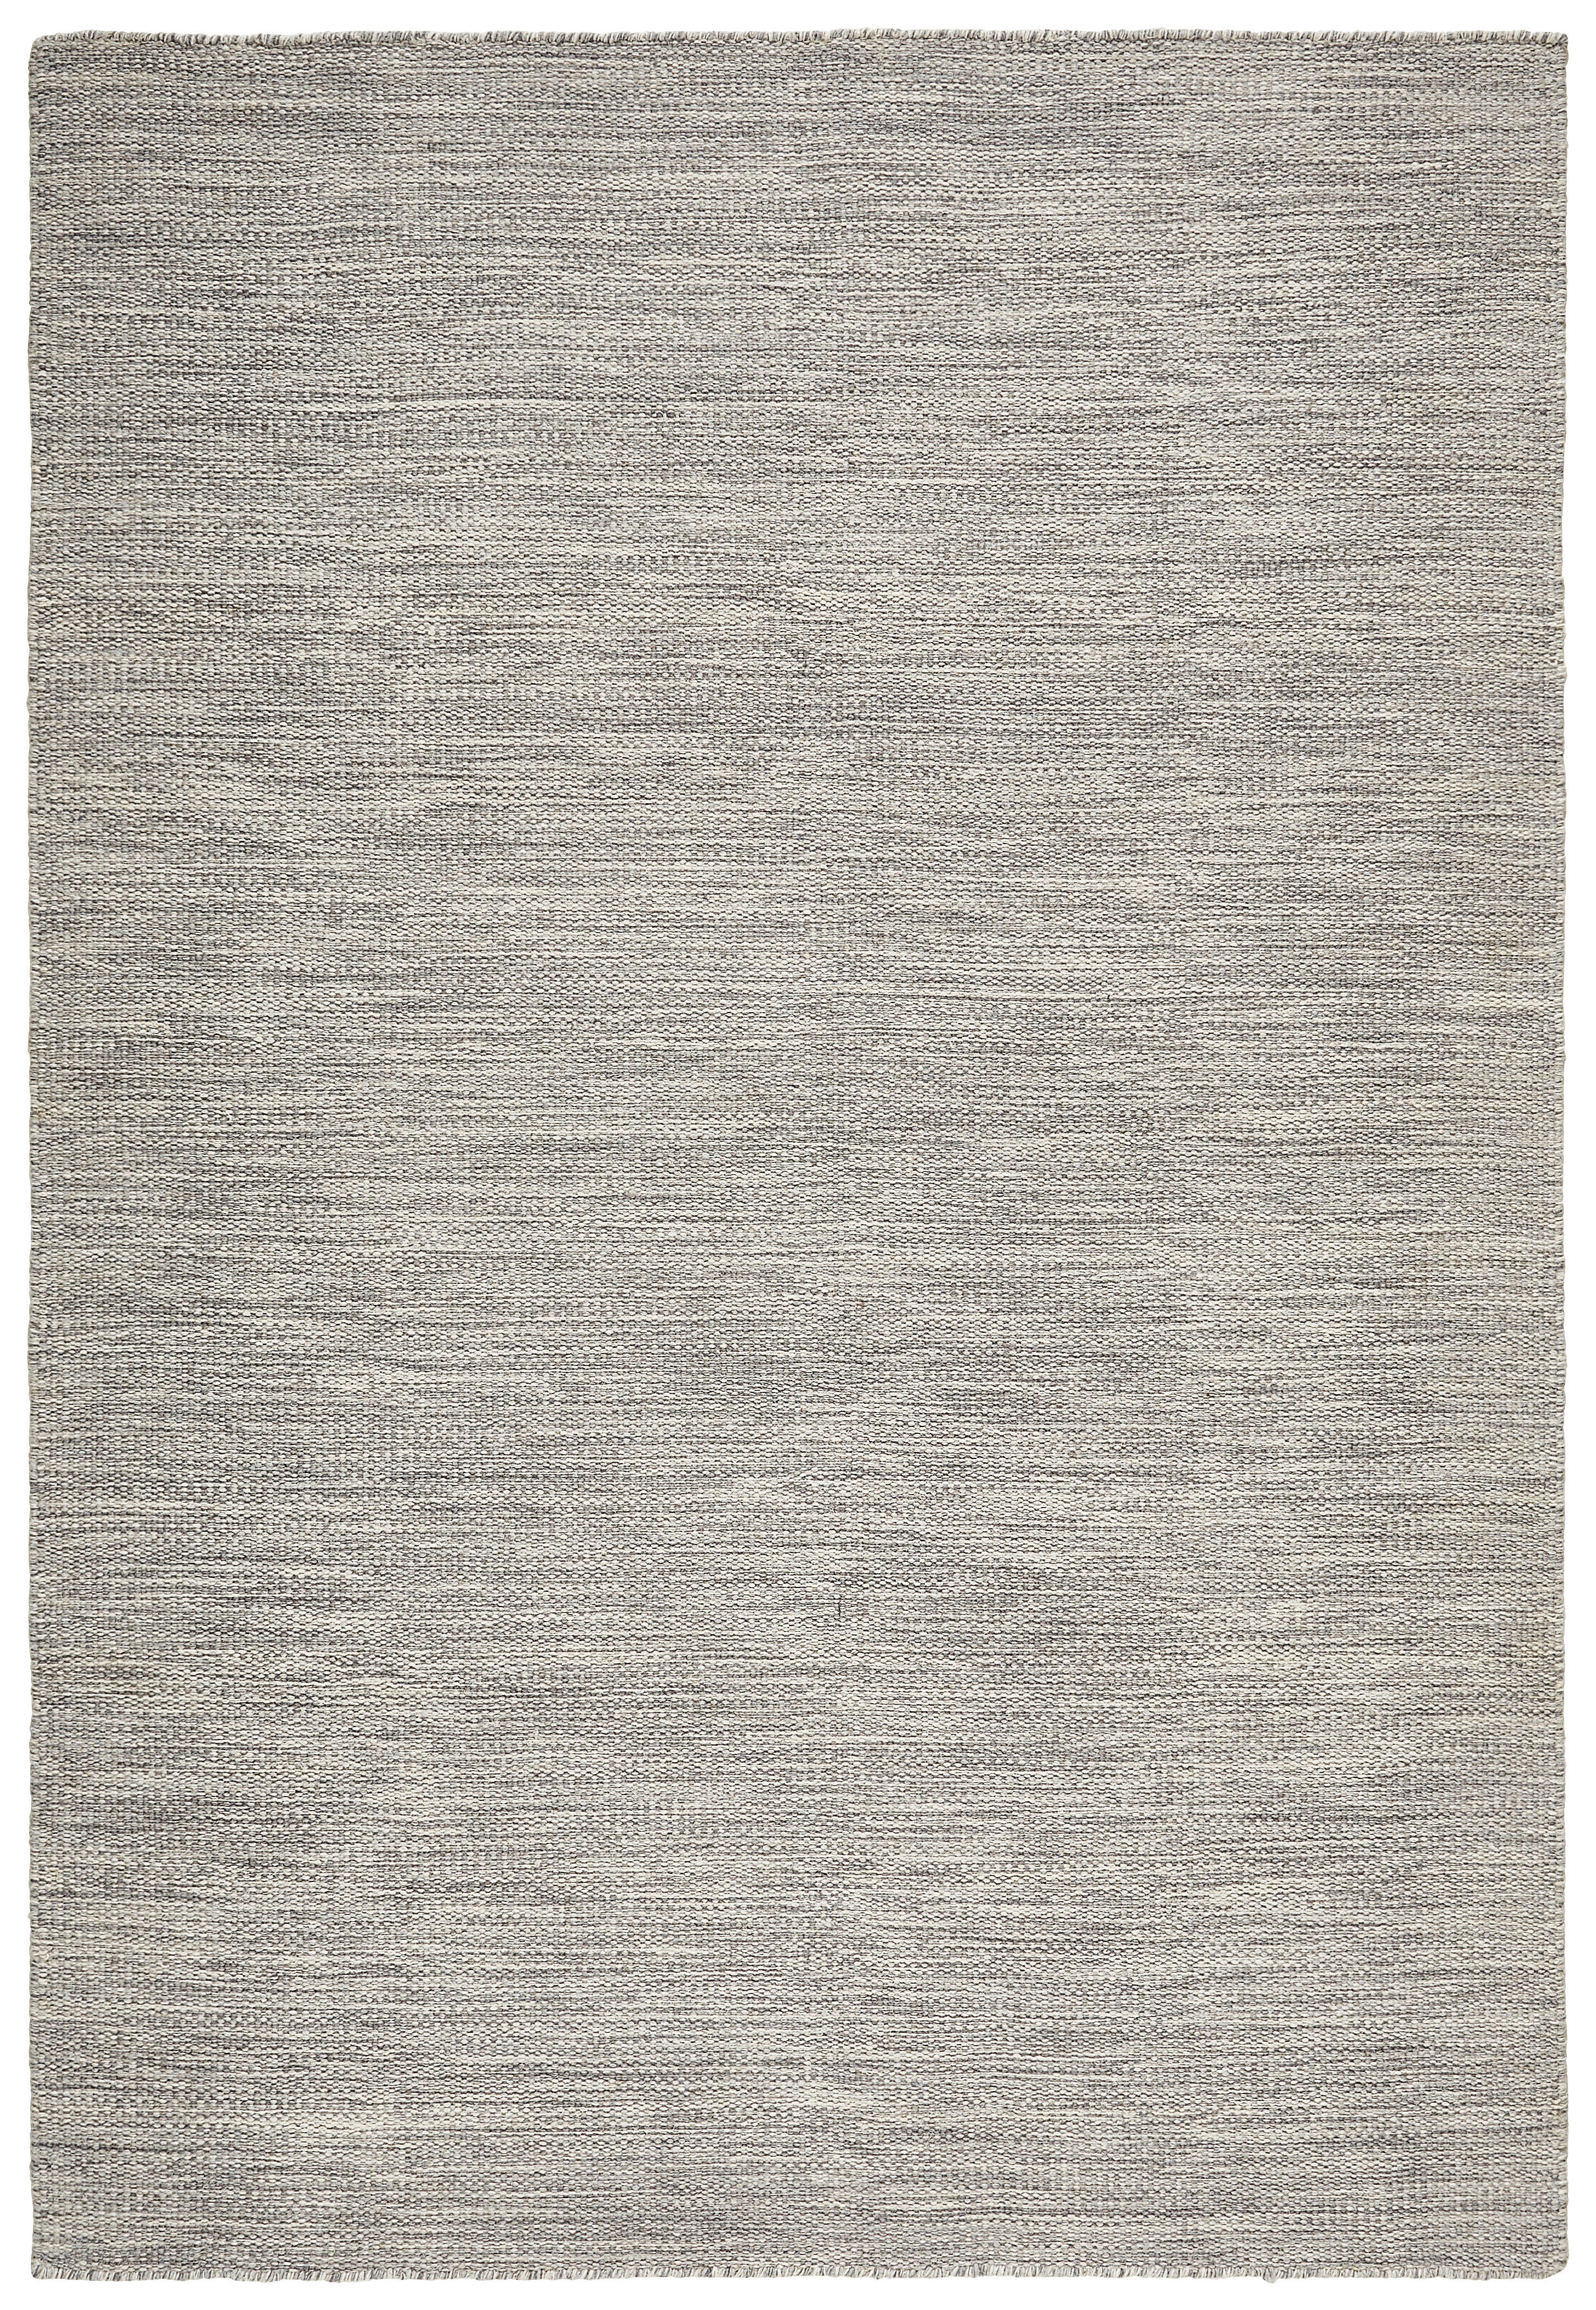 Wollteppich 120/180 cm  - Silberfarben, Natur, Textil (120/180cm) - Linea Natura